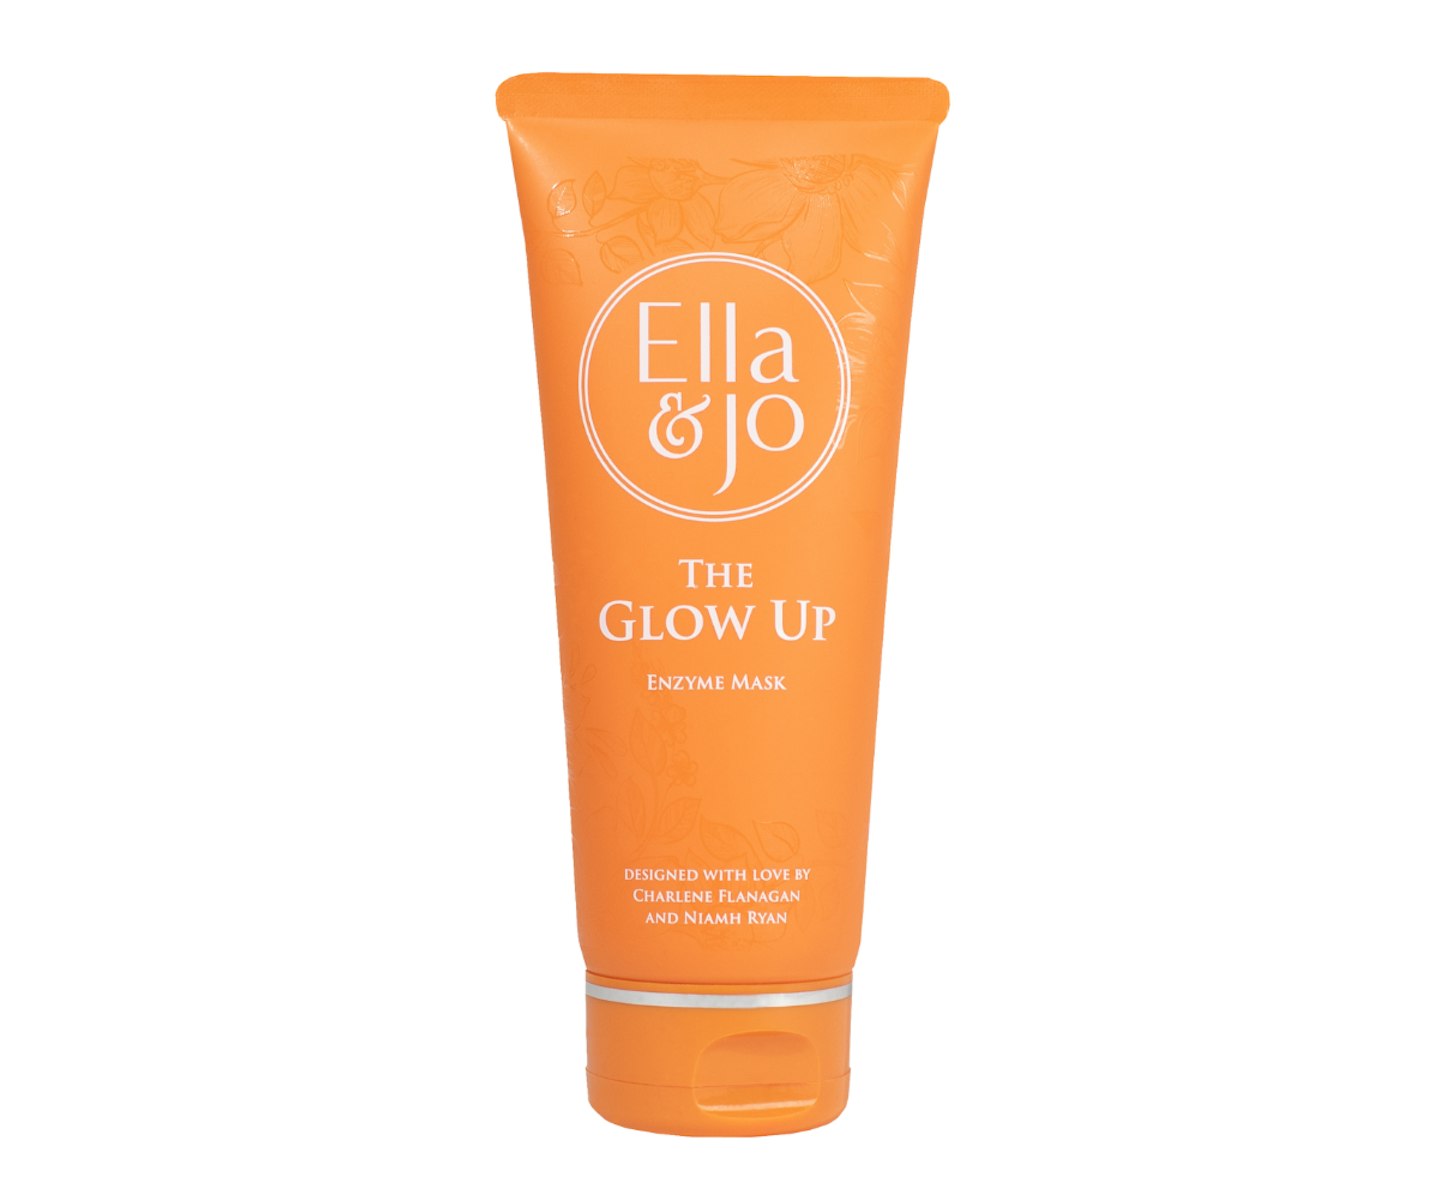 Ella & Jo The Glow Up Enzyme Mask